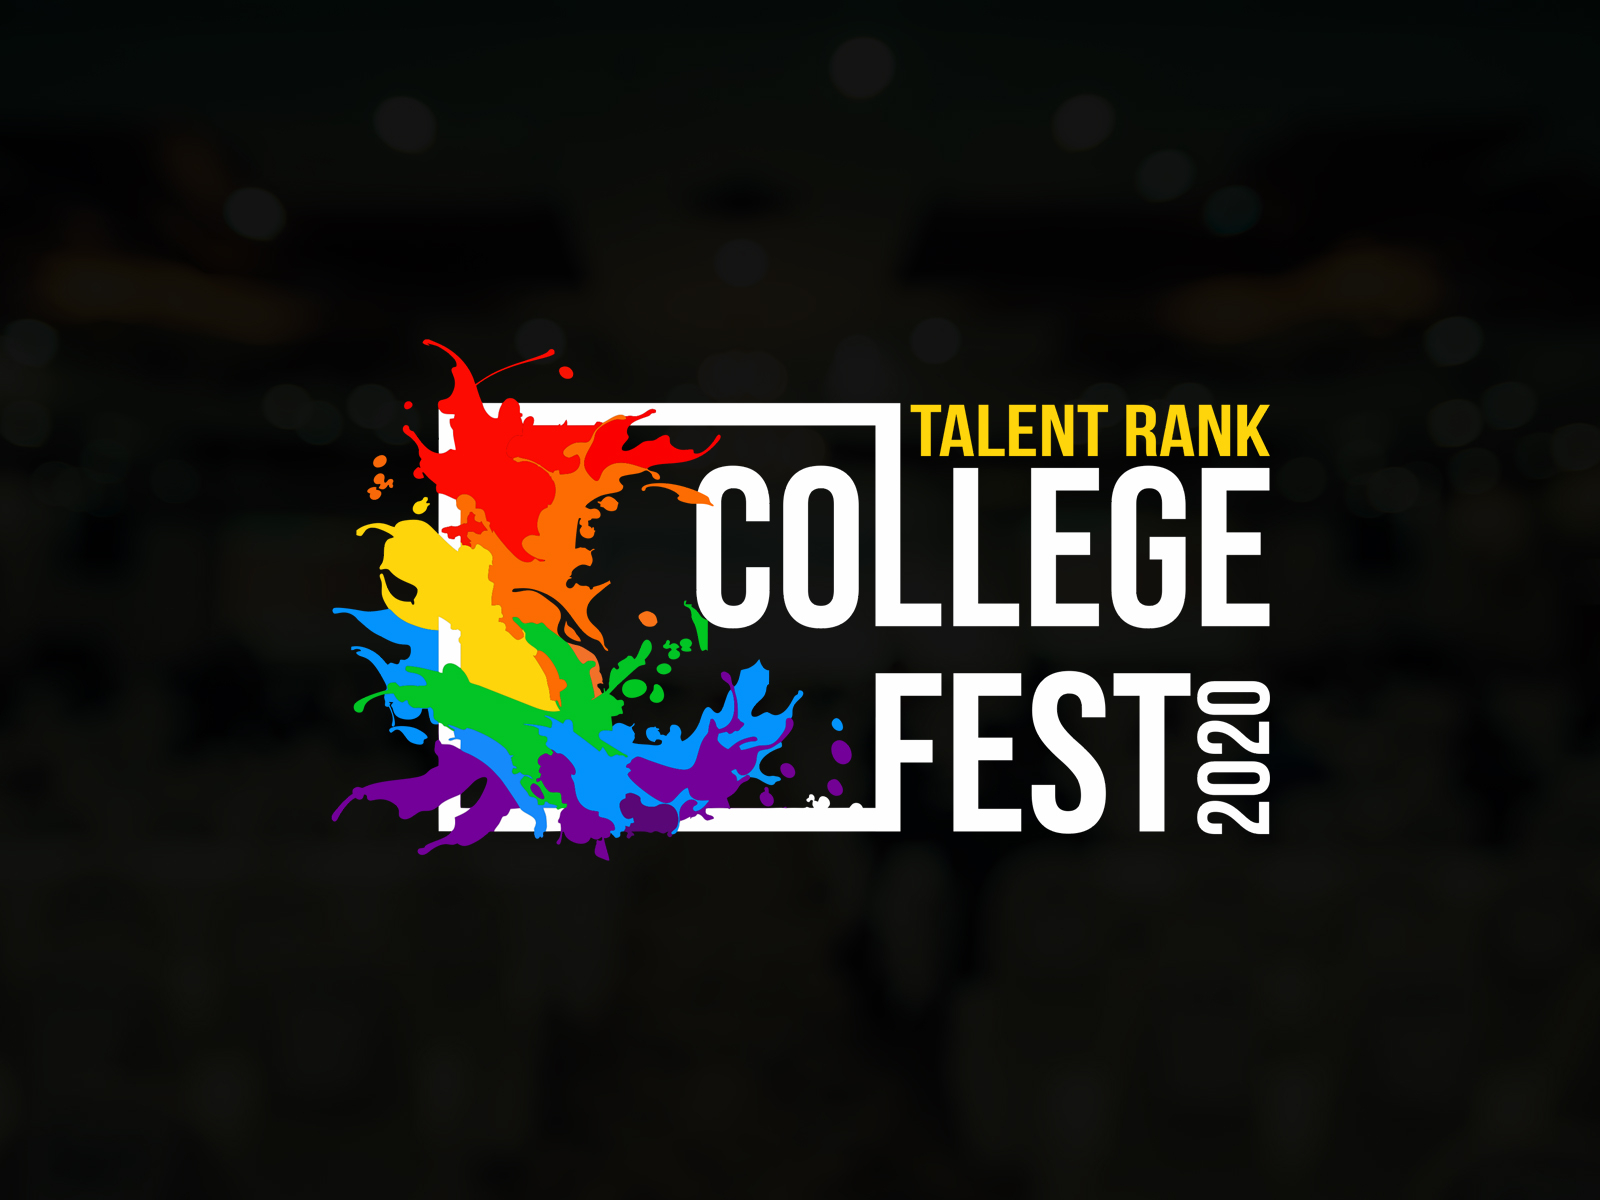 Talent Rank College Fest by Mukesh J on Dribbble